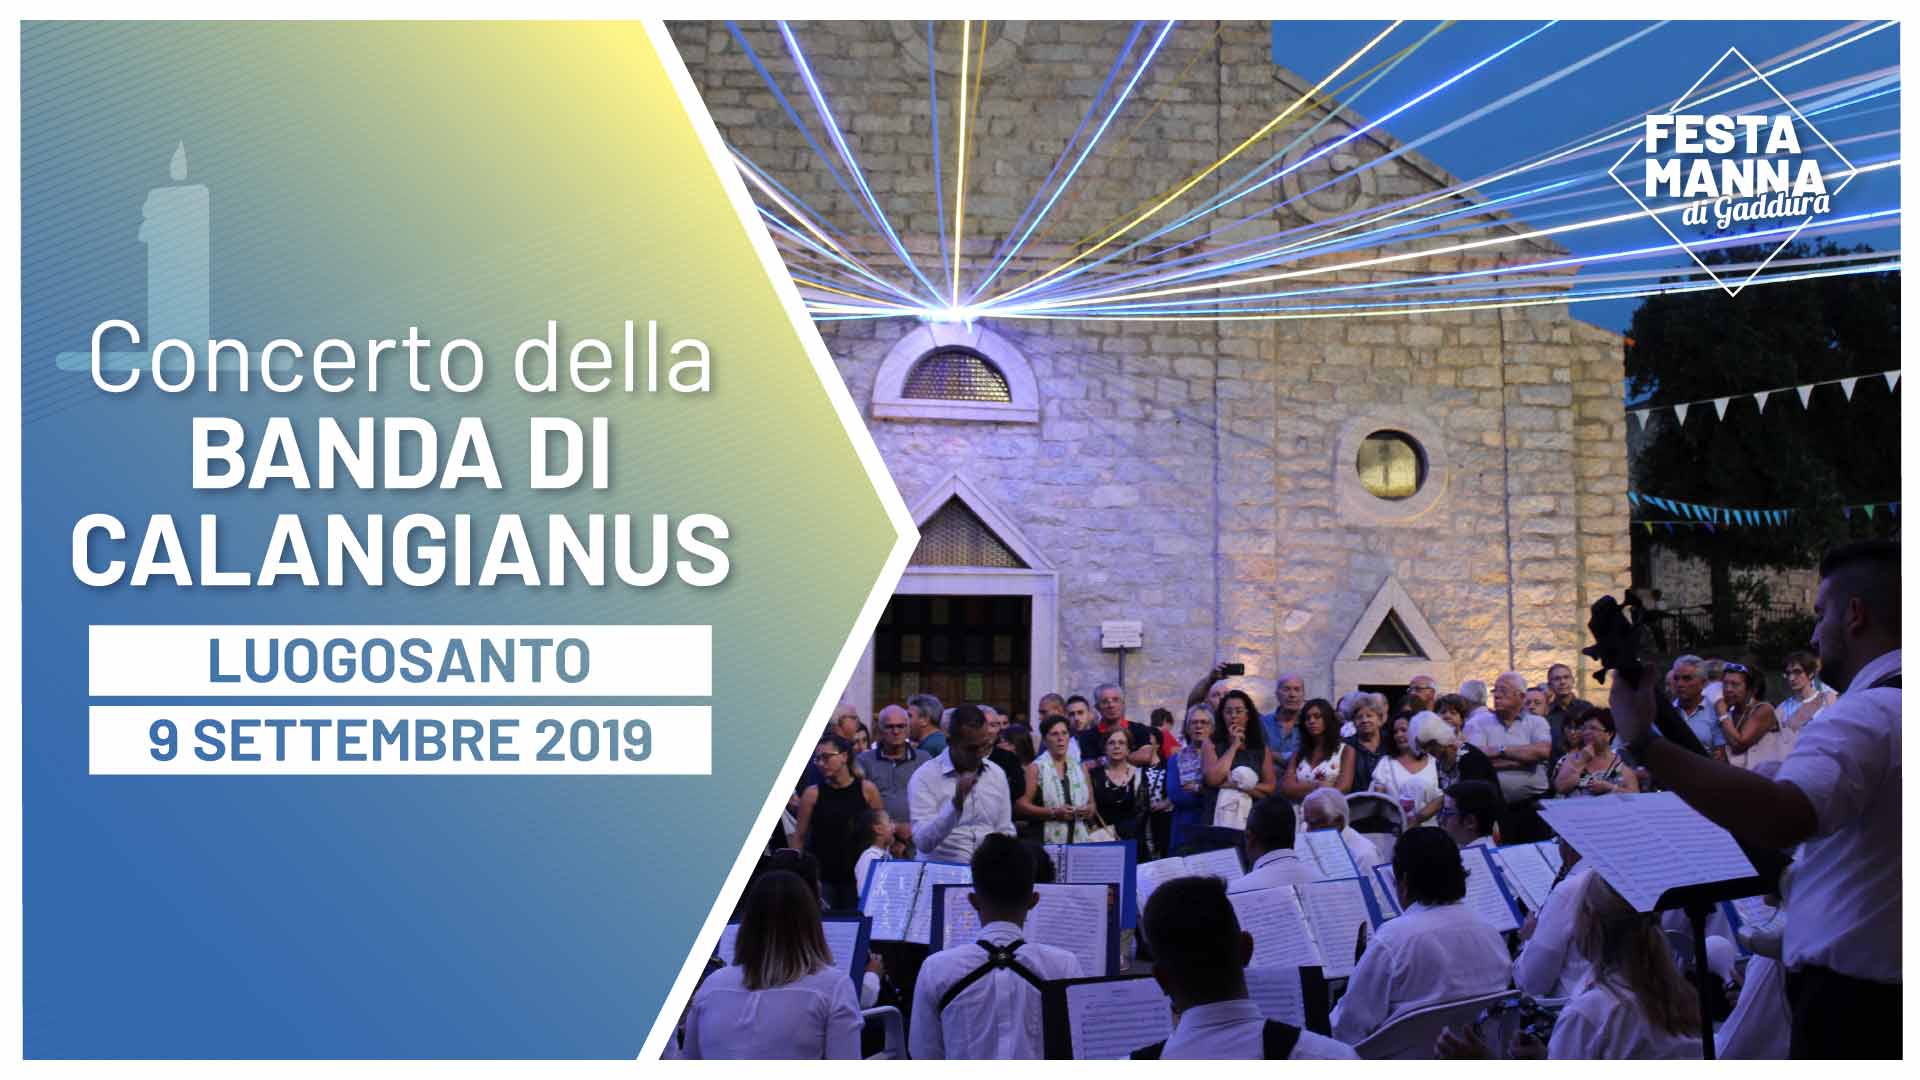 Calangianus musical band | Festa Manna di Gaddura 2019